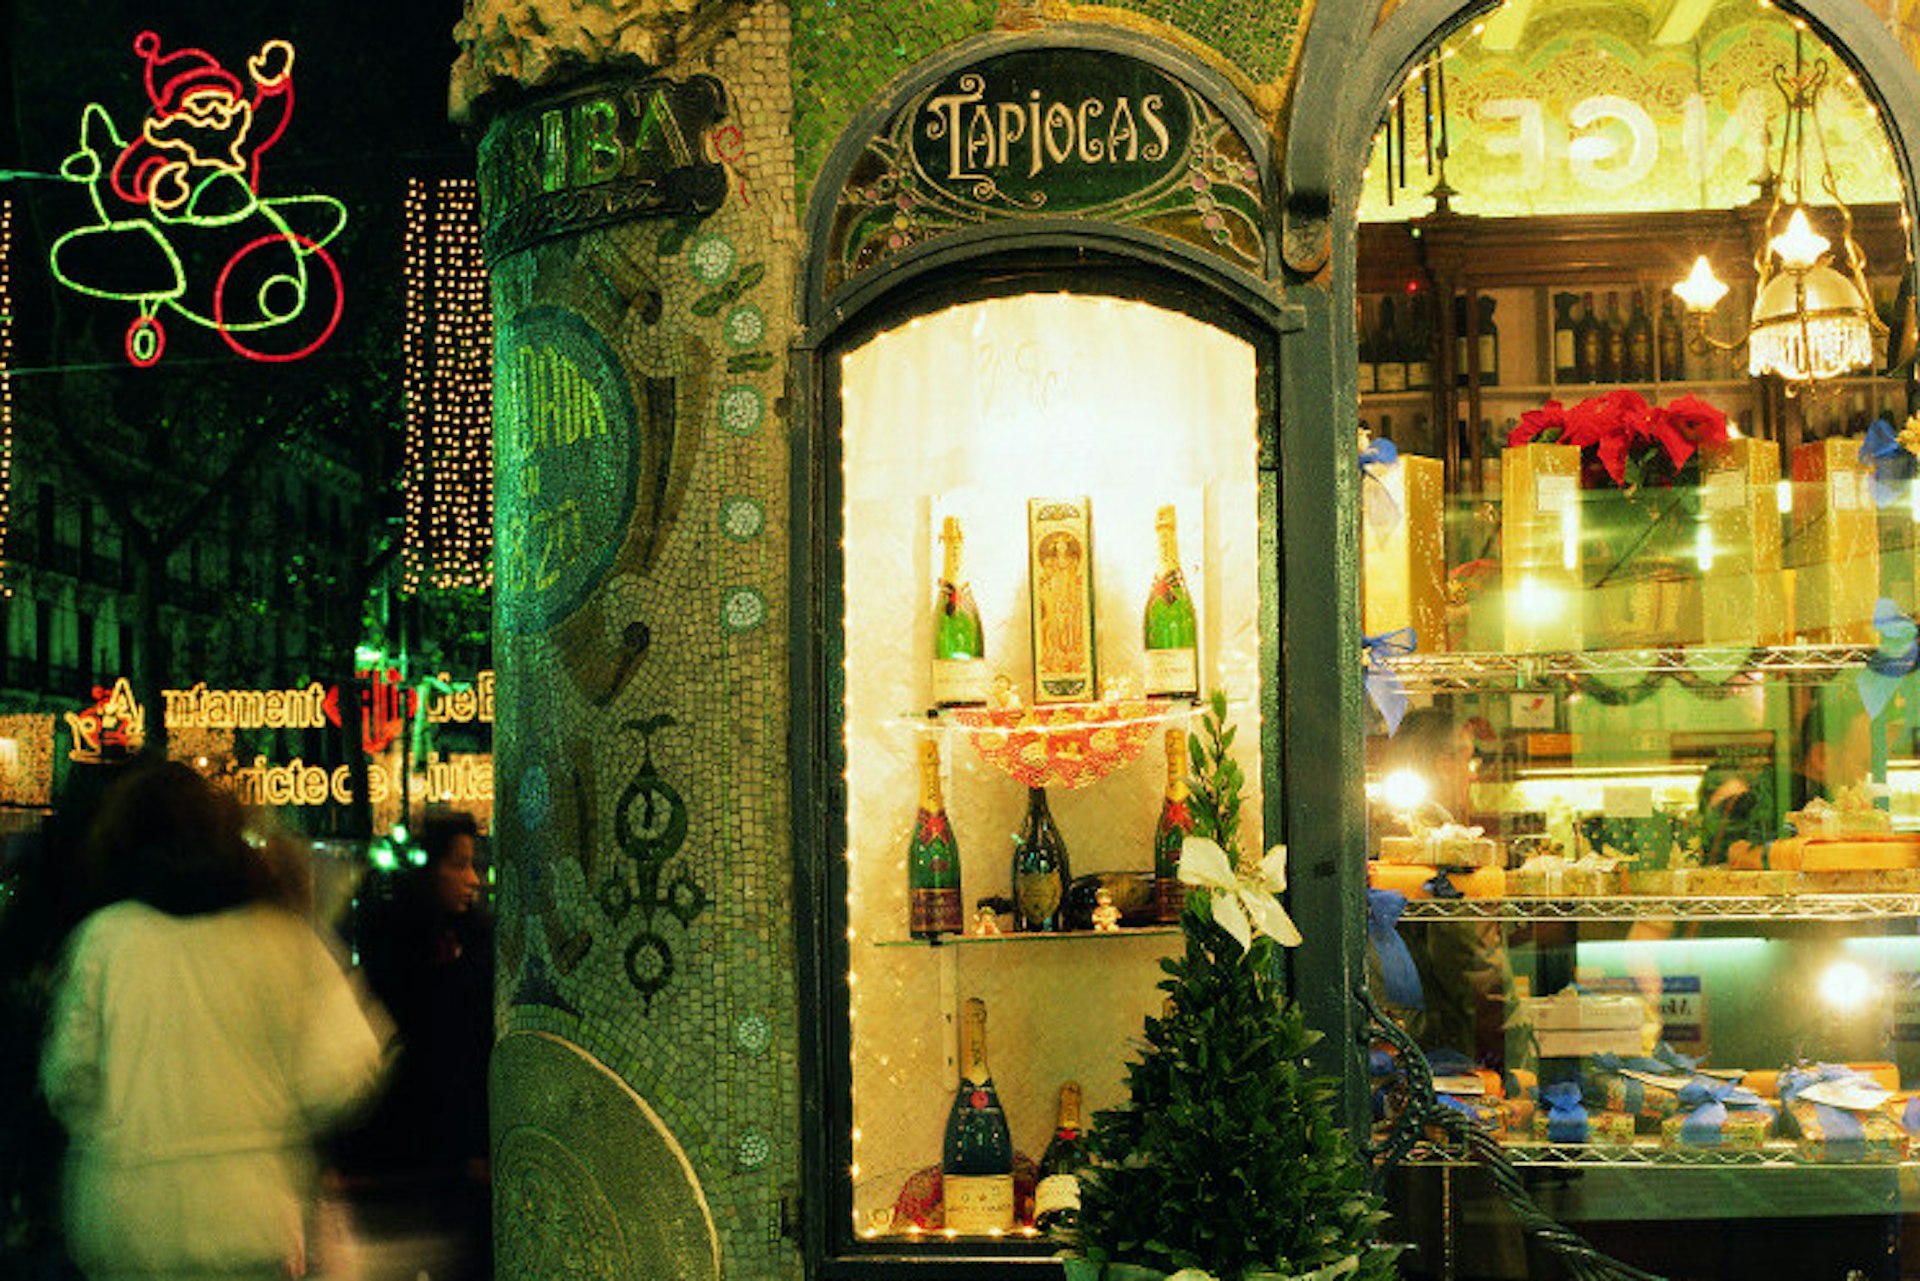 A festive shop display in Barcelona. Image © Barcelona Turisme